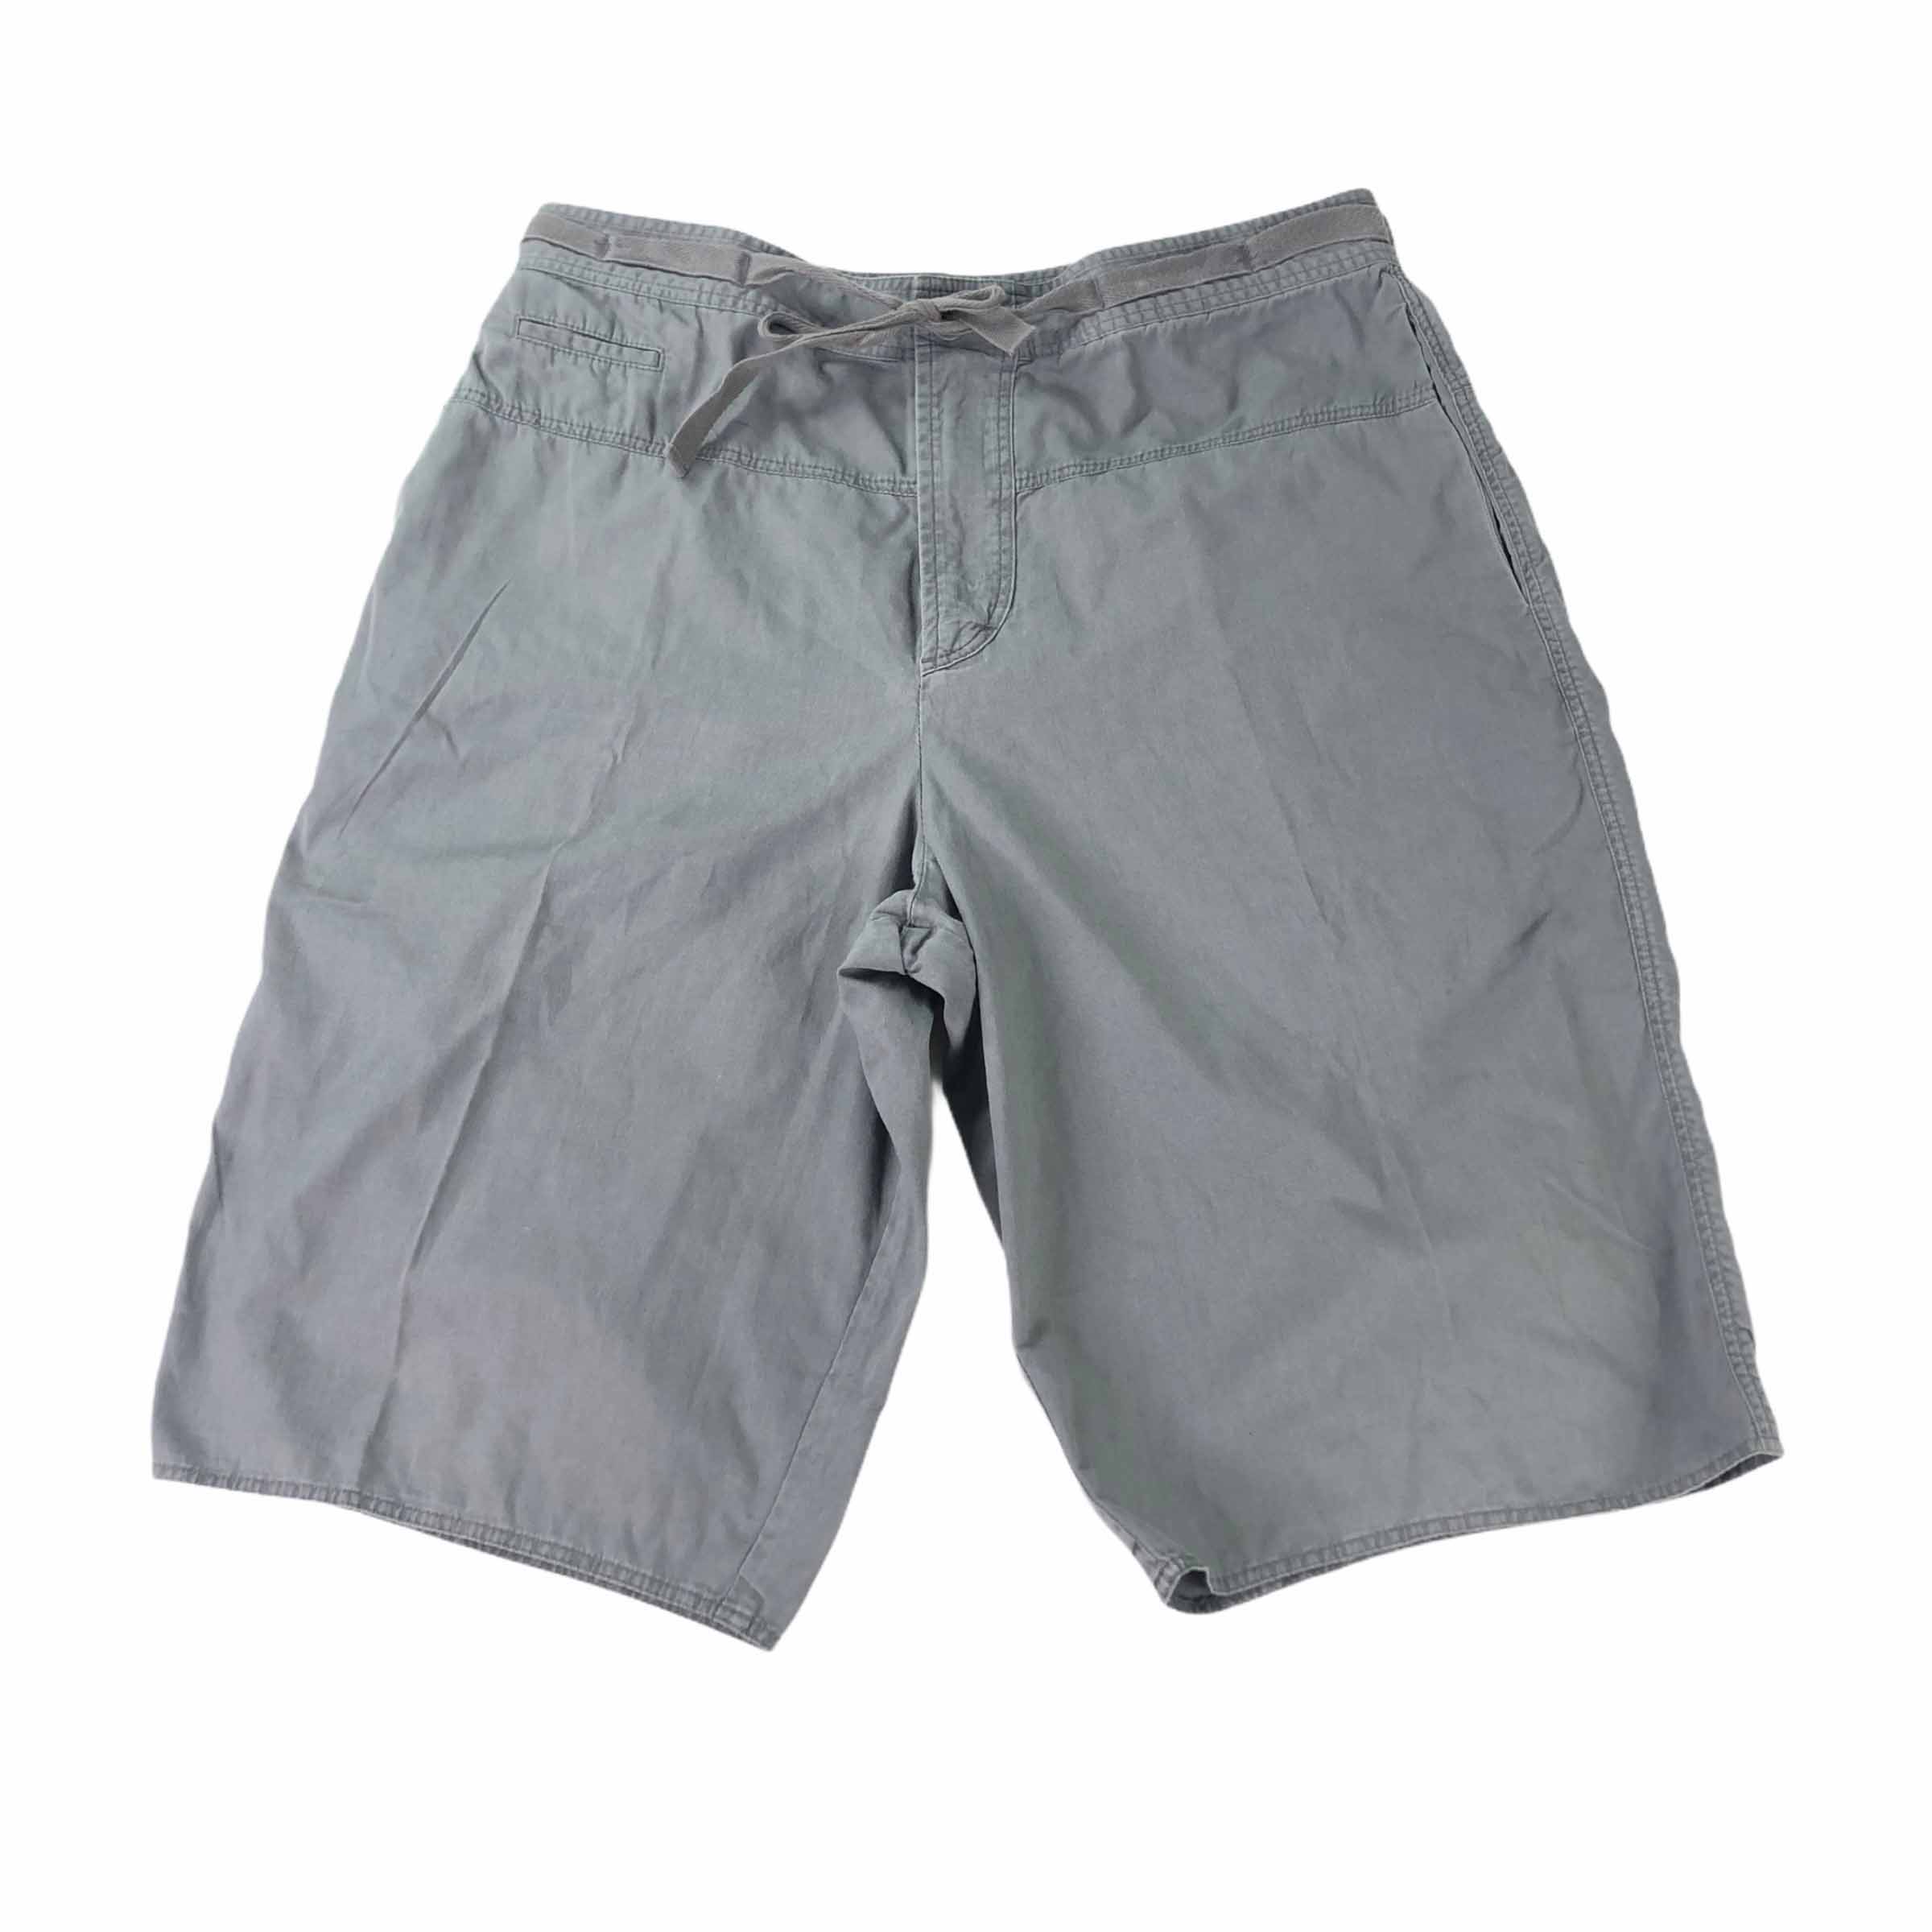 [Alexander Wang] Gray Short Cargo Pants - Size S